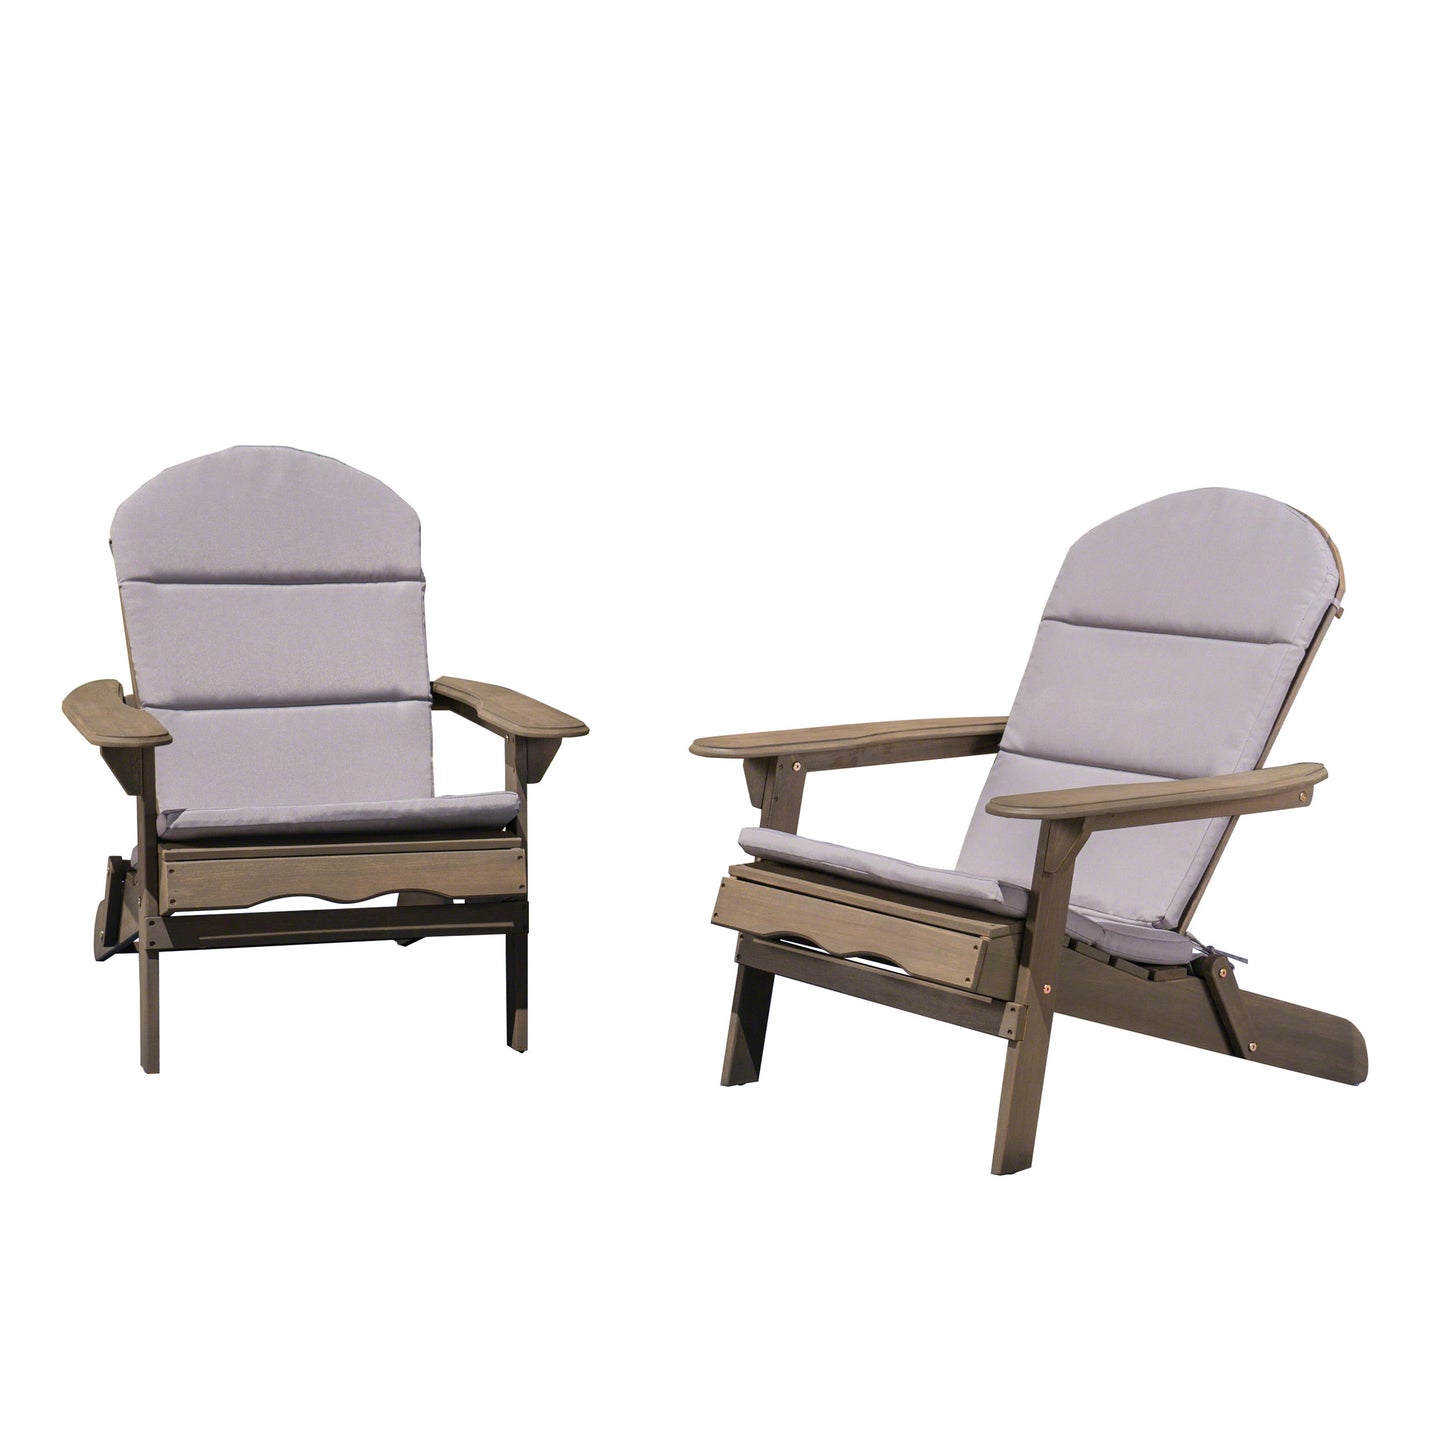 Amenda Outdoor Acacia Wood Folding Adirondack Chairs with Cushions